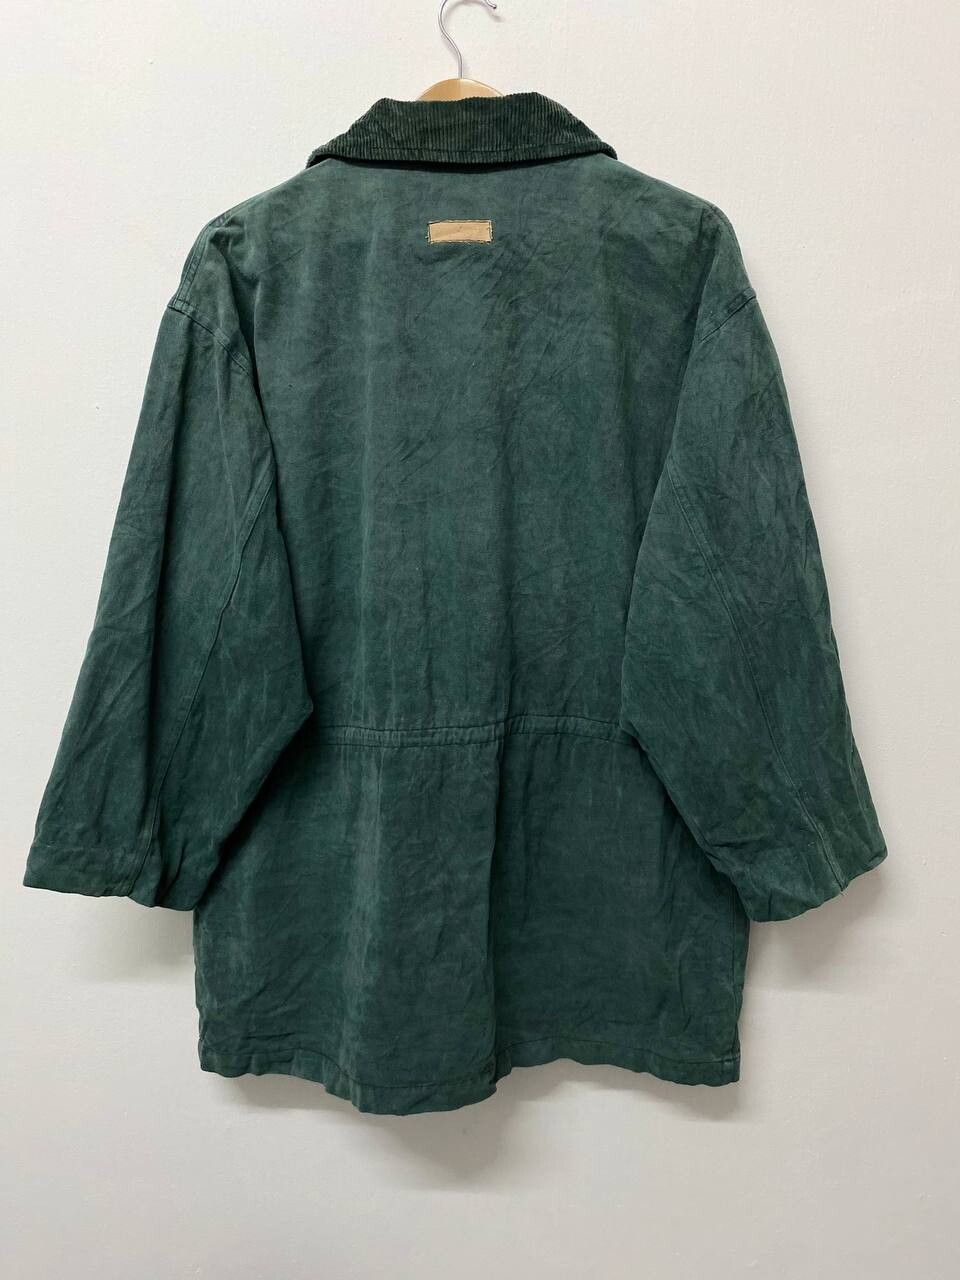 Vintage vintage lobo by pendleton khakis jacket nice design Size US M / EU 48-50 / 2 - 4 Thumbnail